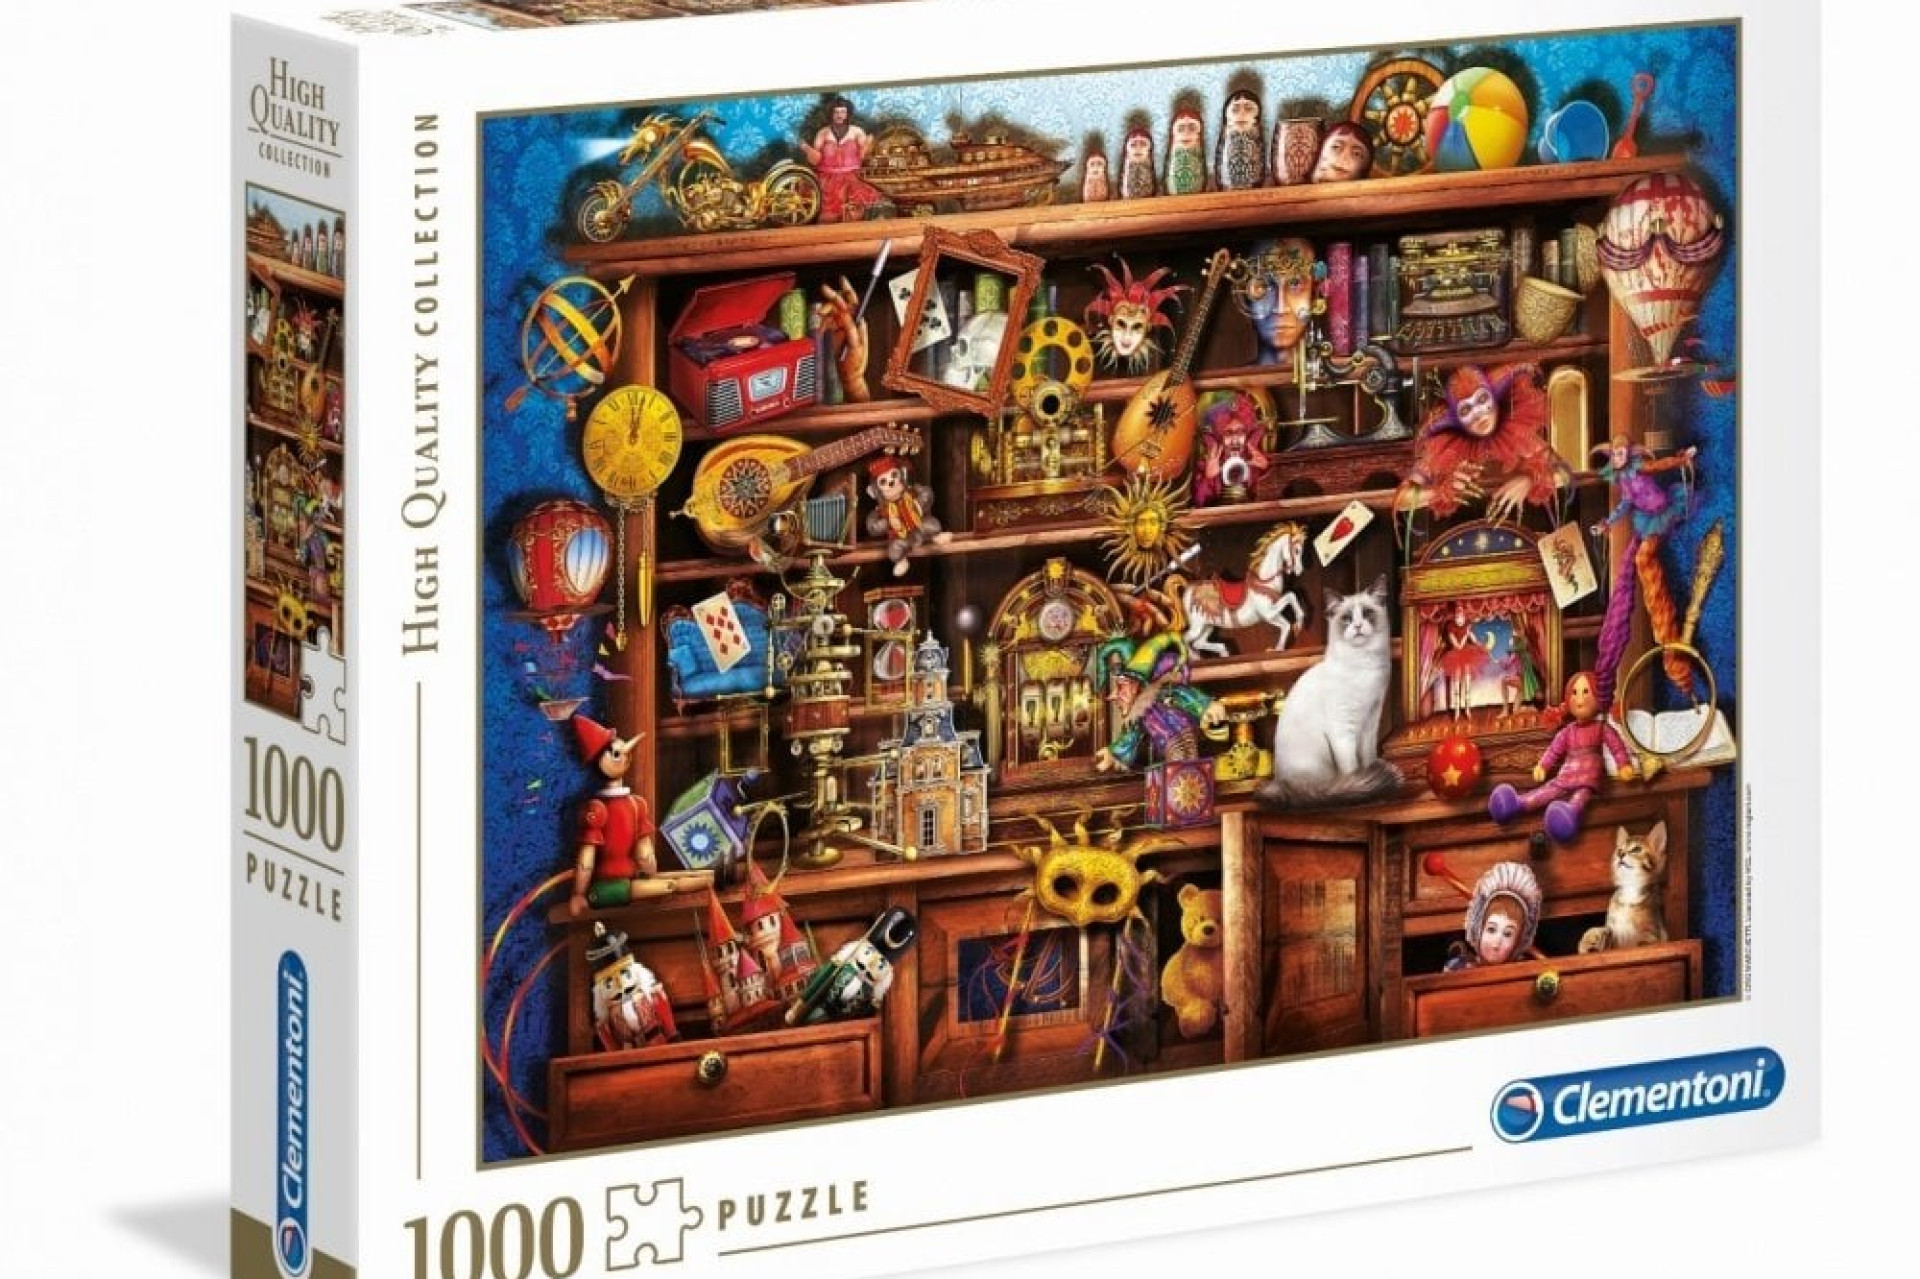 Acheter Ye old shoppe - Puzzle de 1000 pièces - Collection High Quality